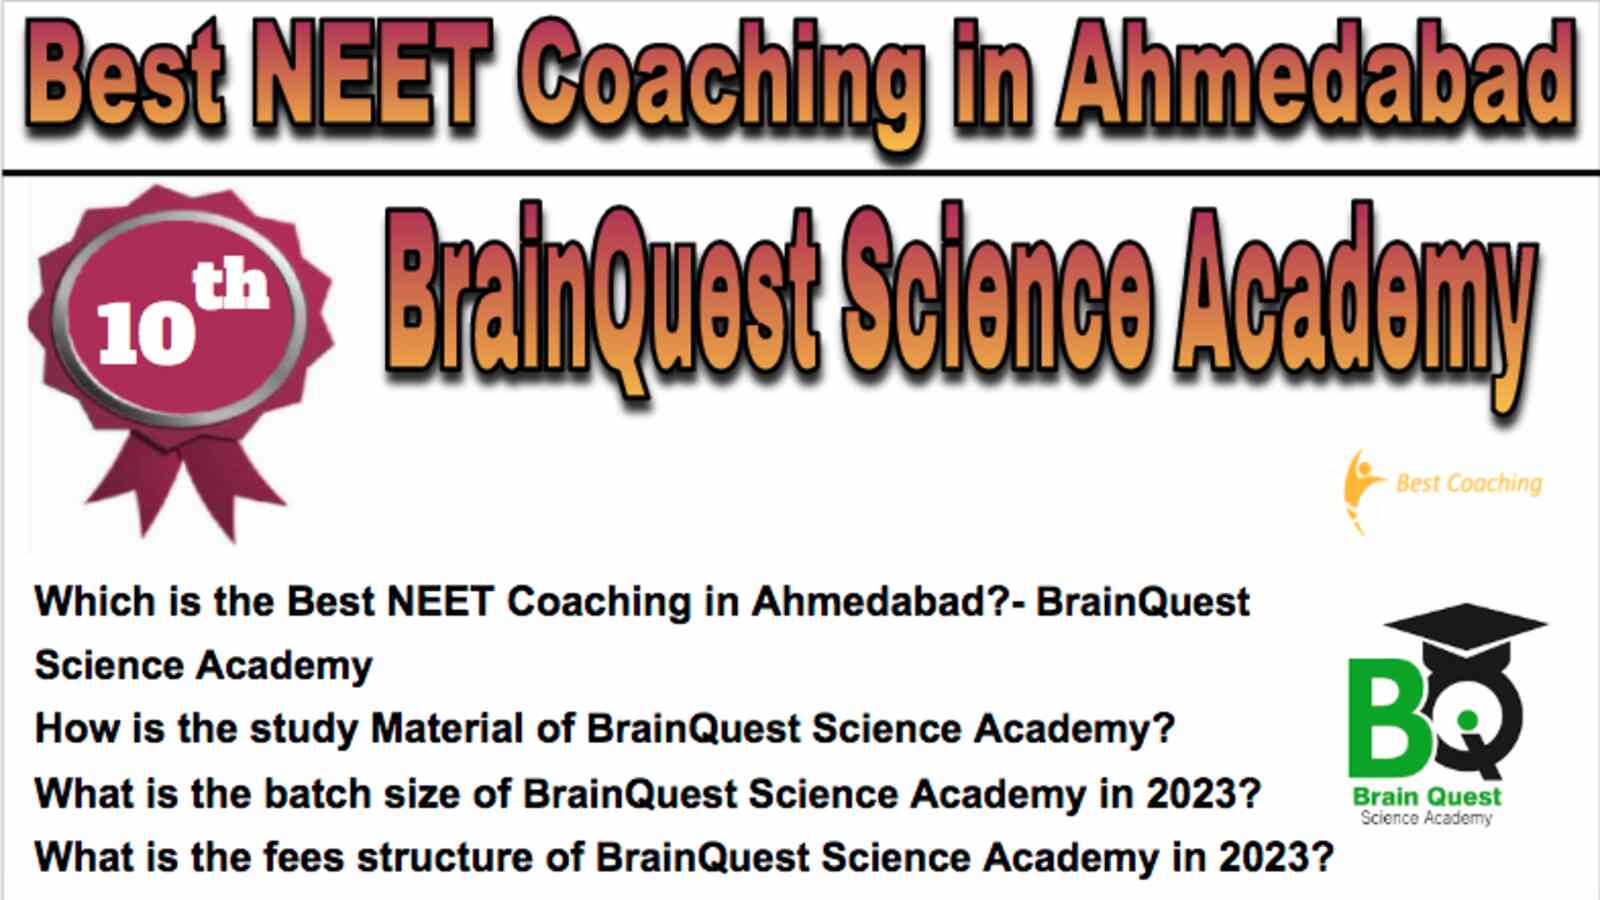 Rank 10 Best NEET Coaching in Ahmedabad